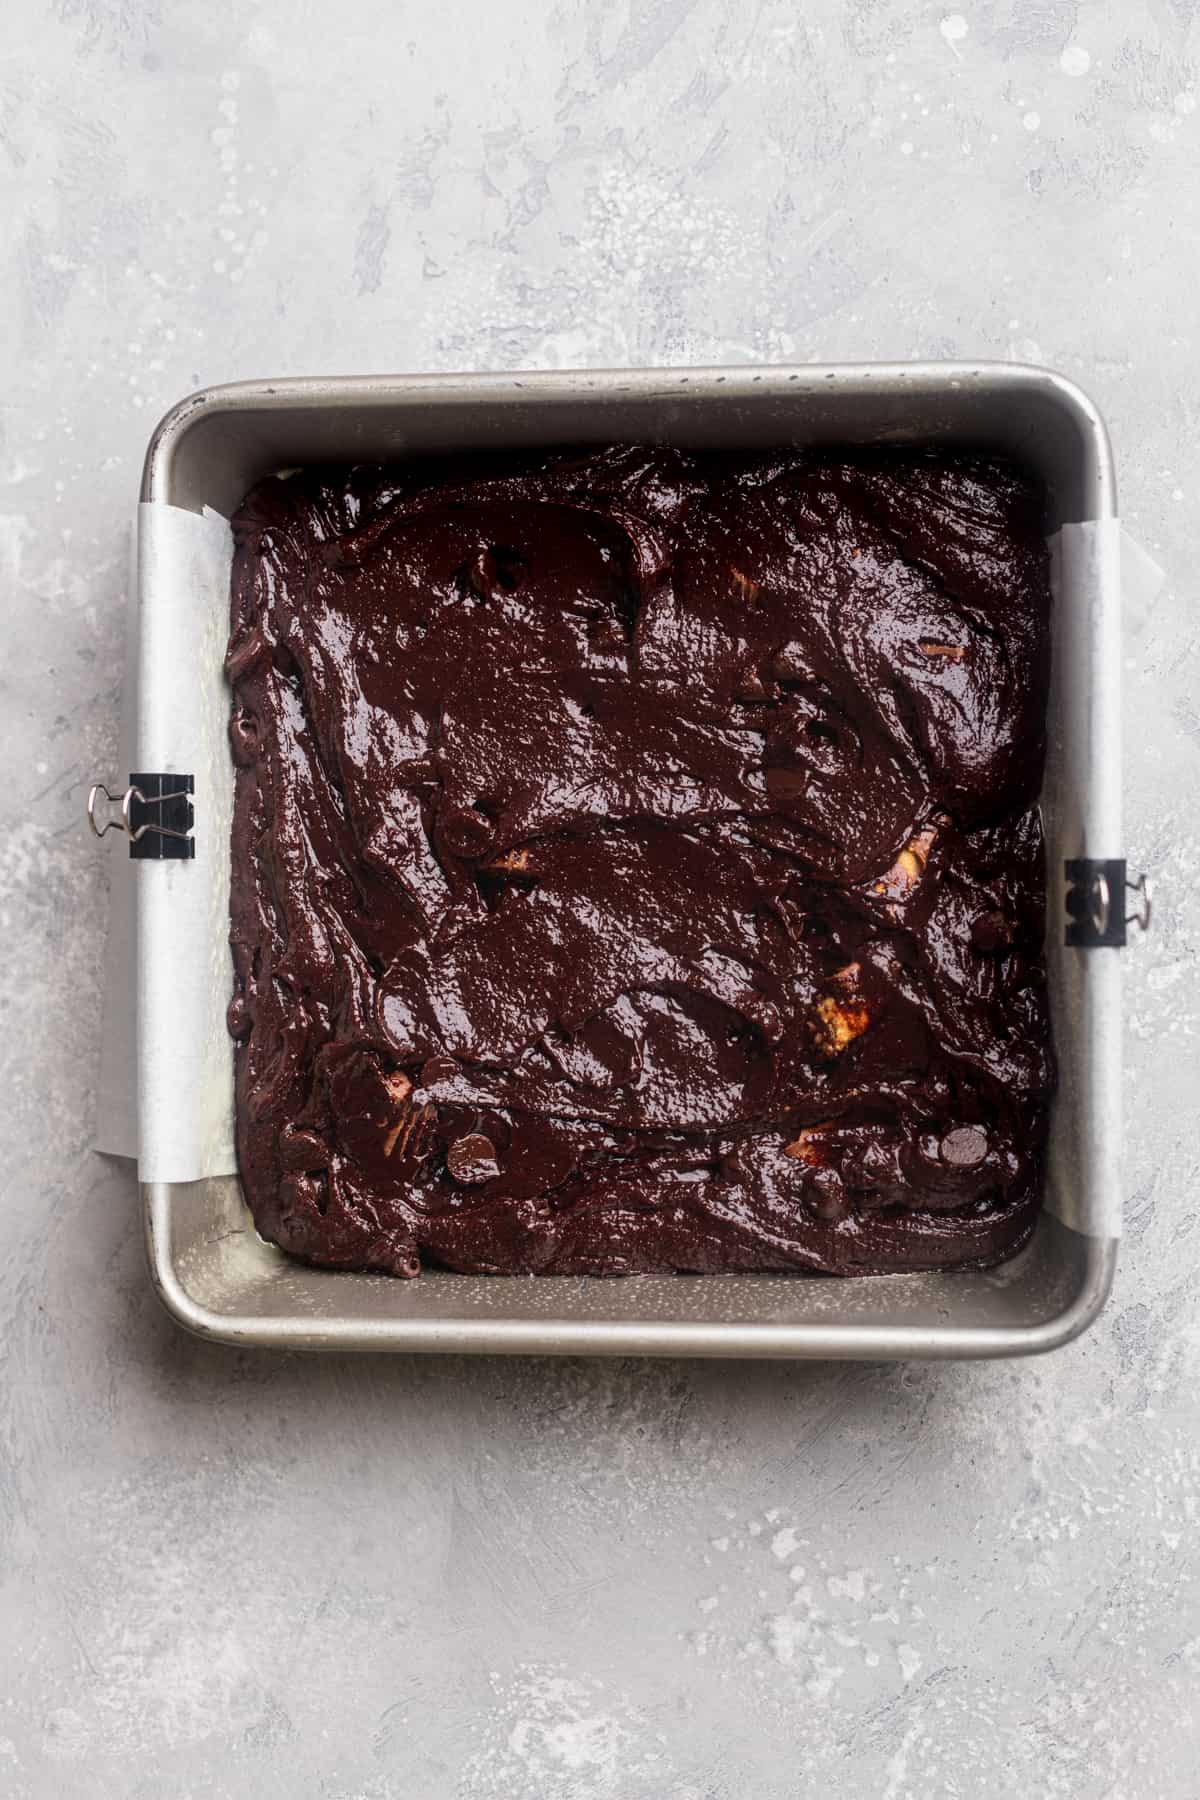 Brownie batter in the pan.